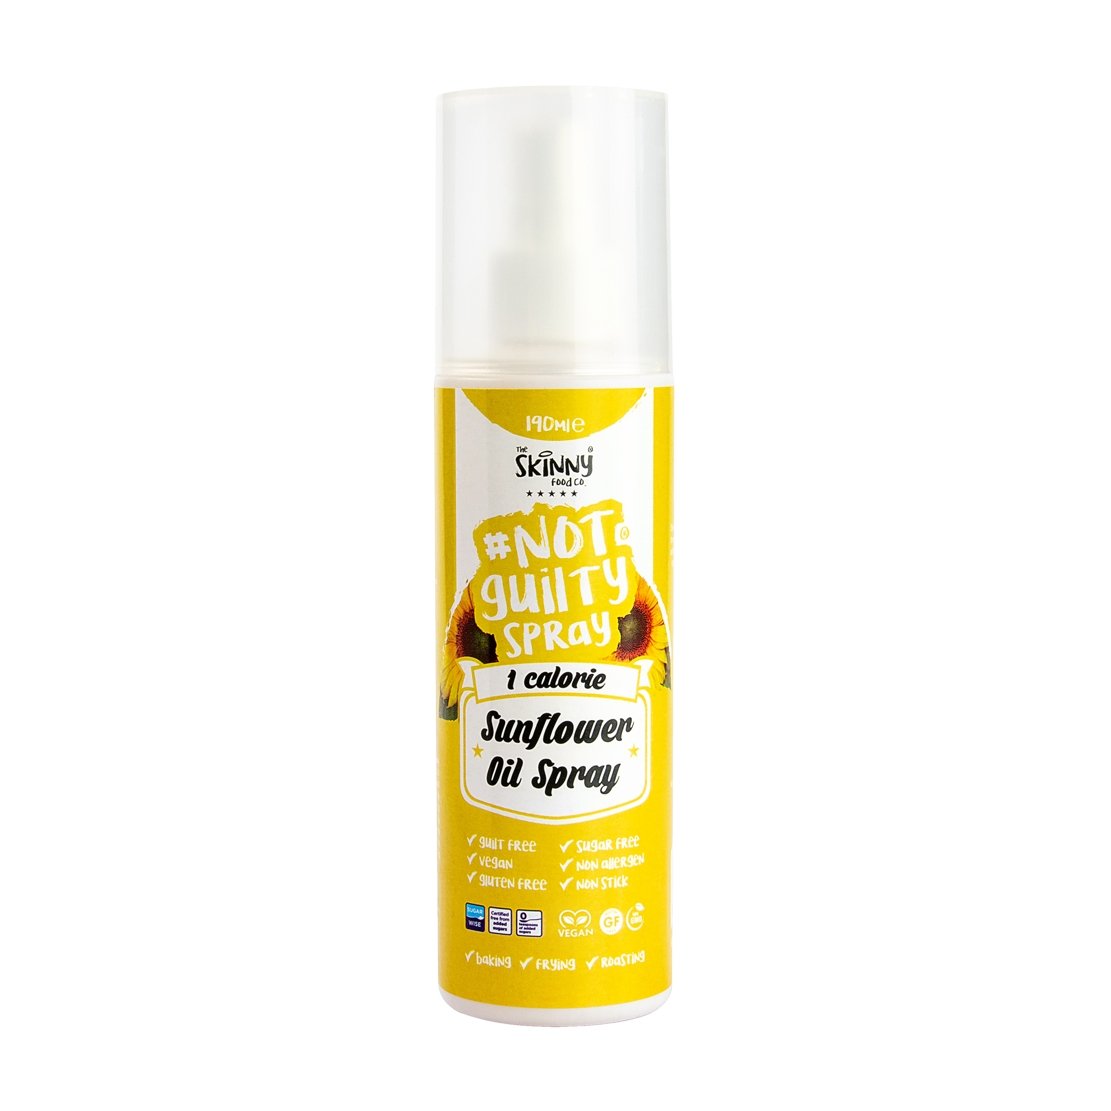 Napraforgóolaj spray - 1 kcal Skinny Oil - 190 ml - theskinnyfoodco